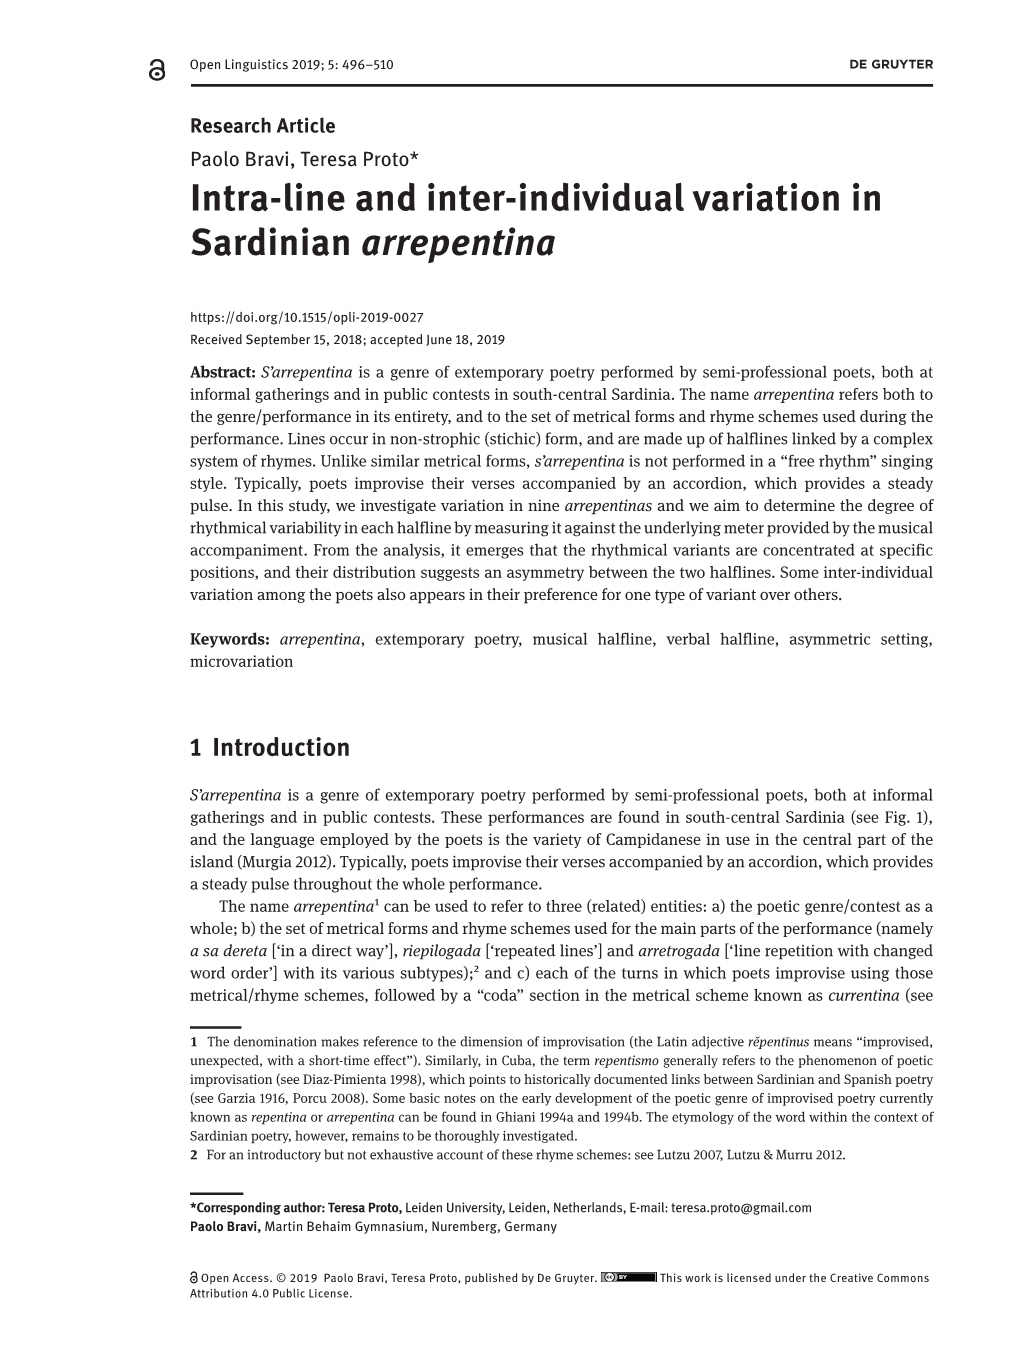 Intra-Line and Inter-Individual Variation in Sardinian Arrepentina